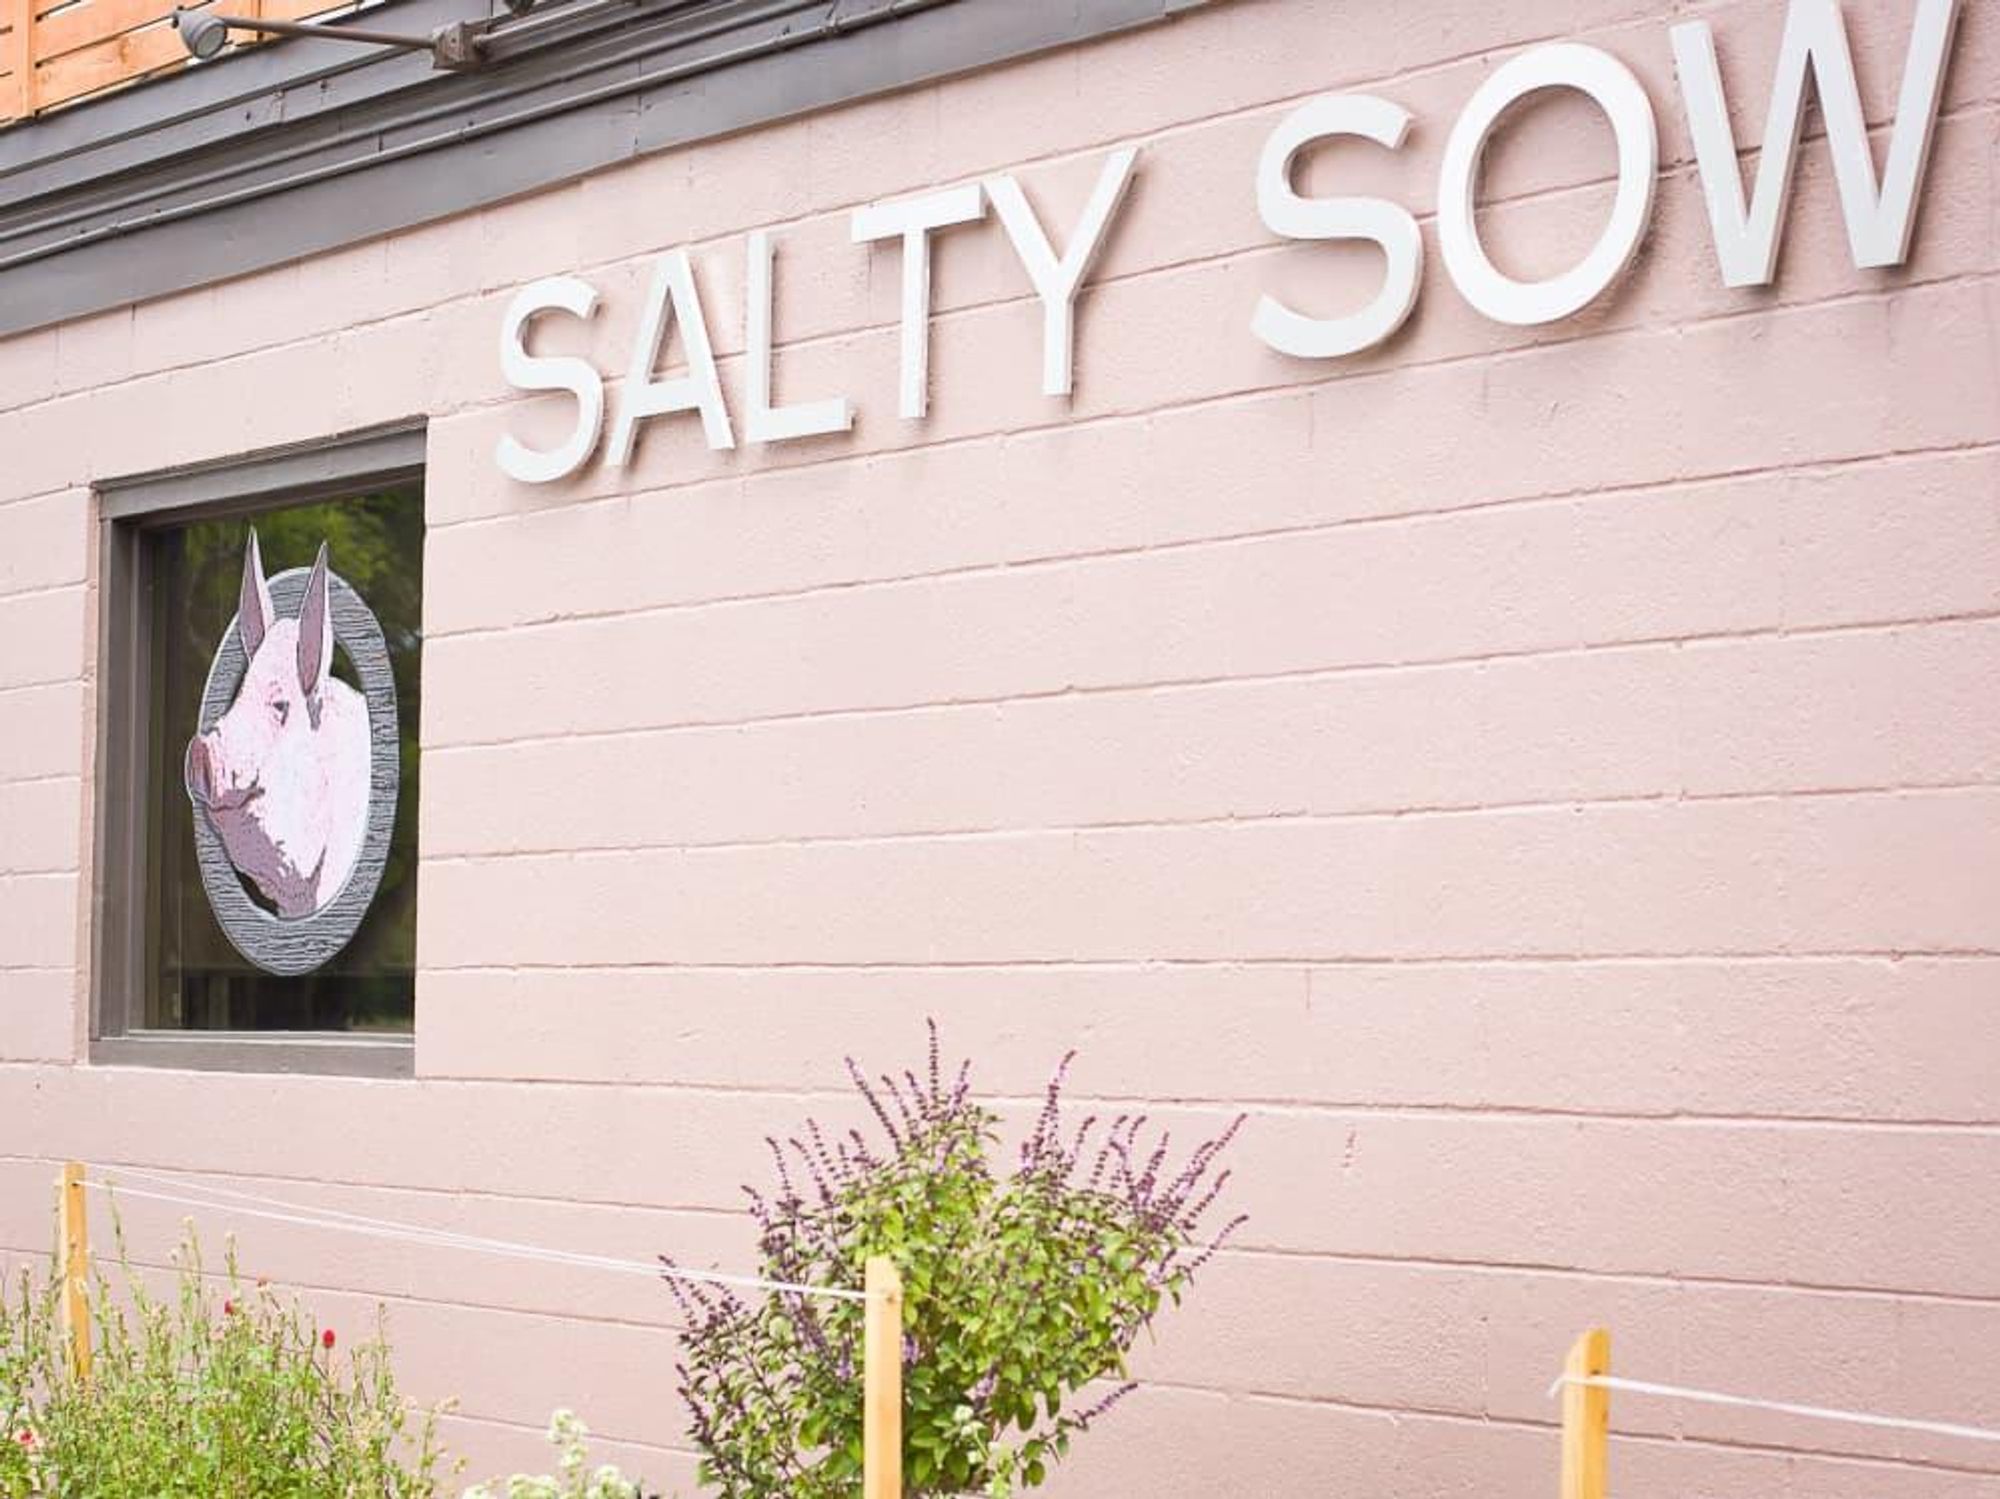 Salty Sow Exterior